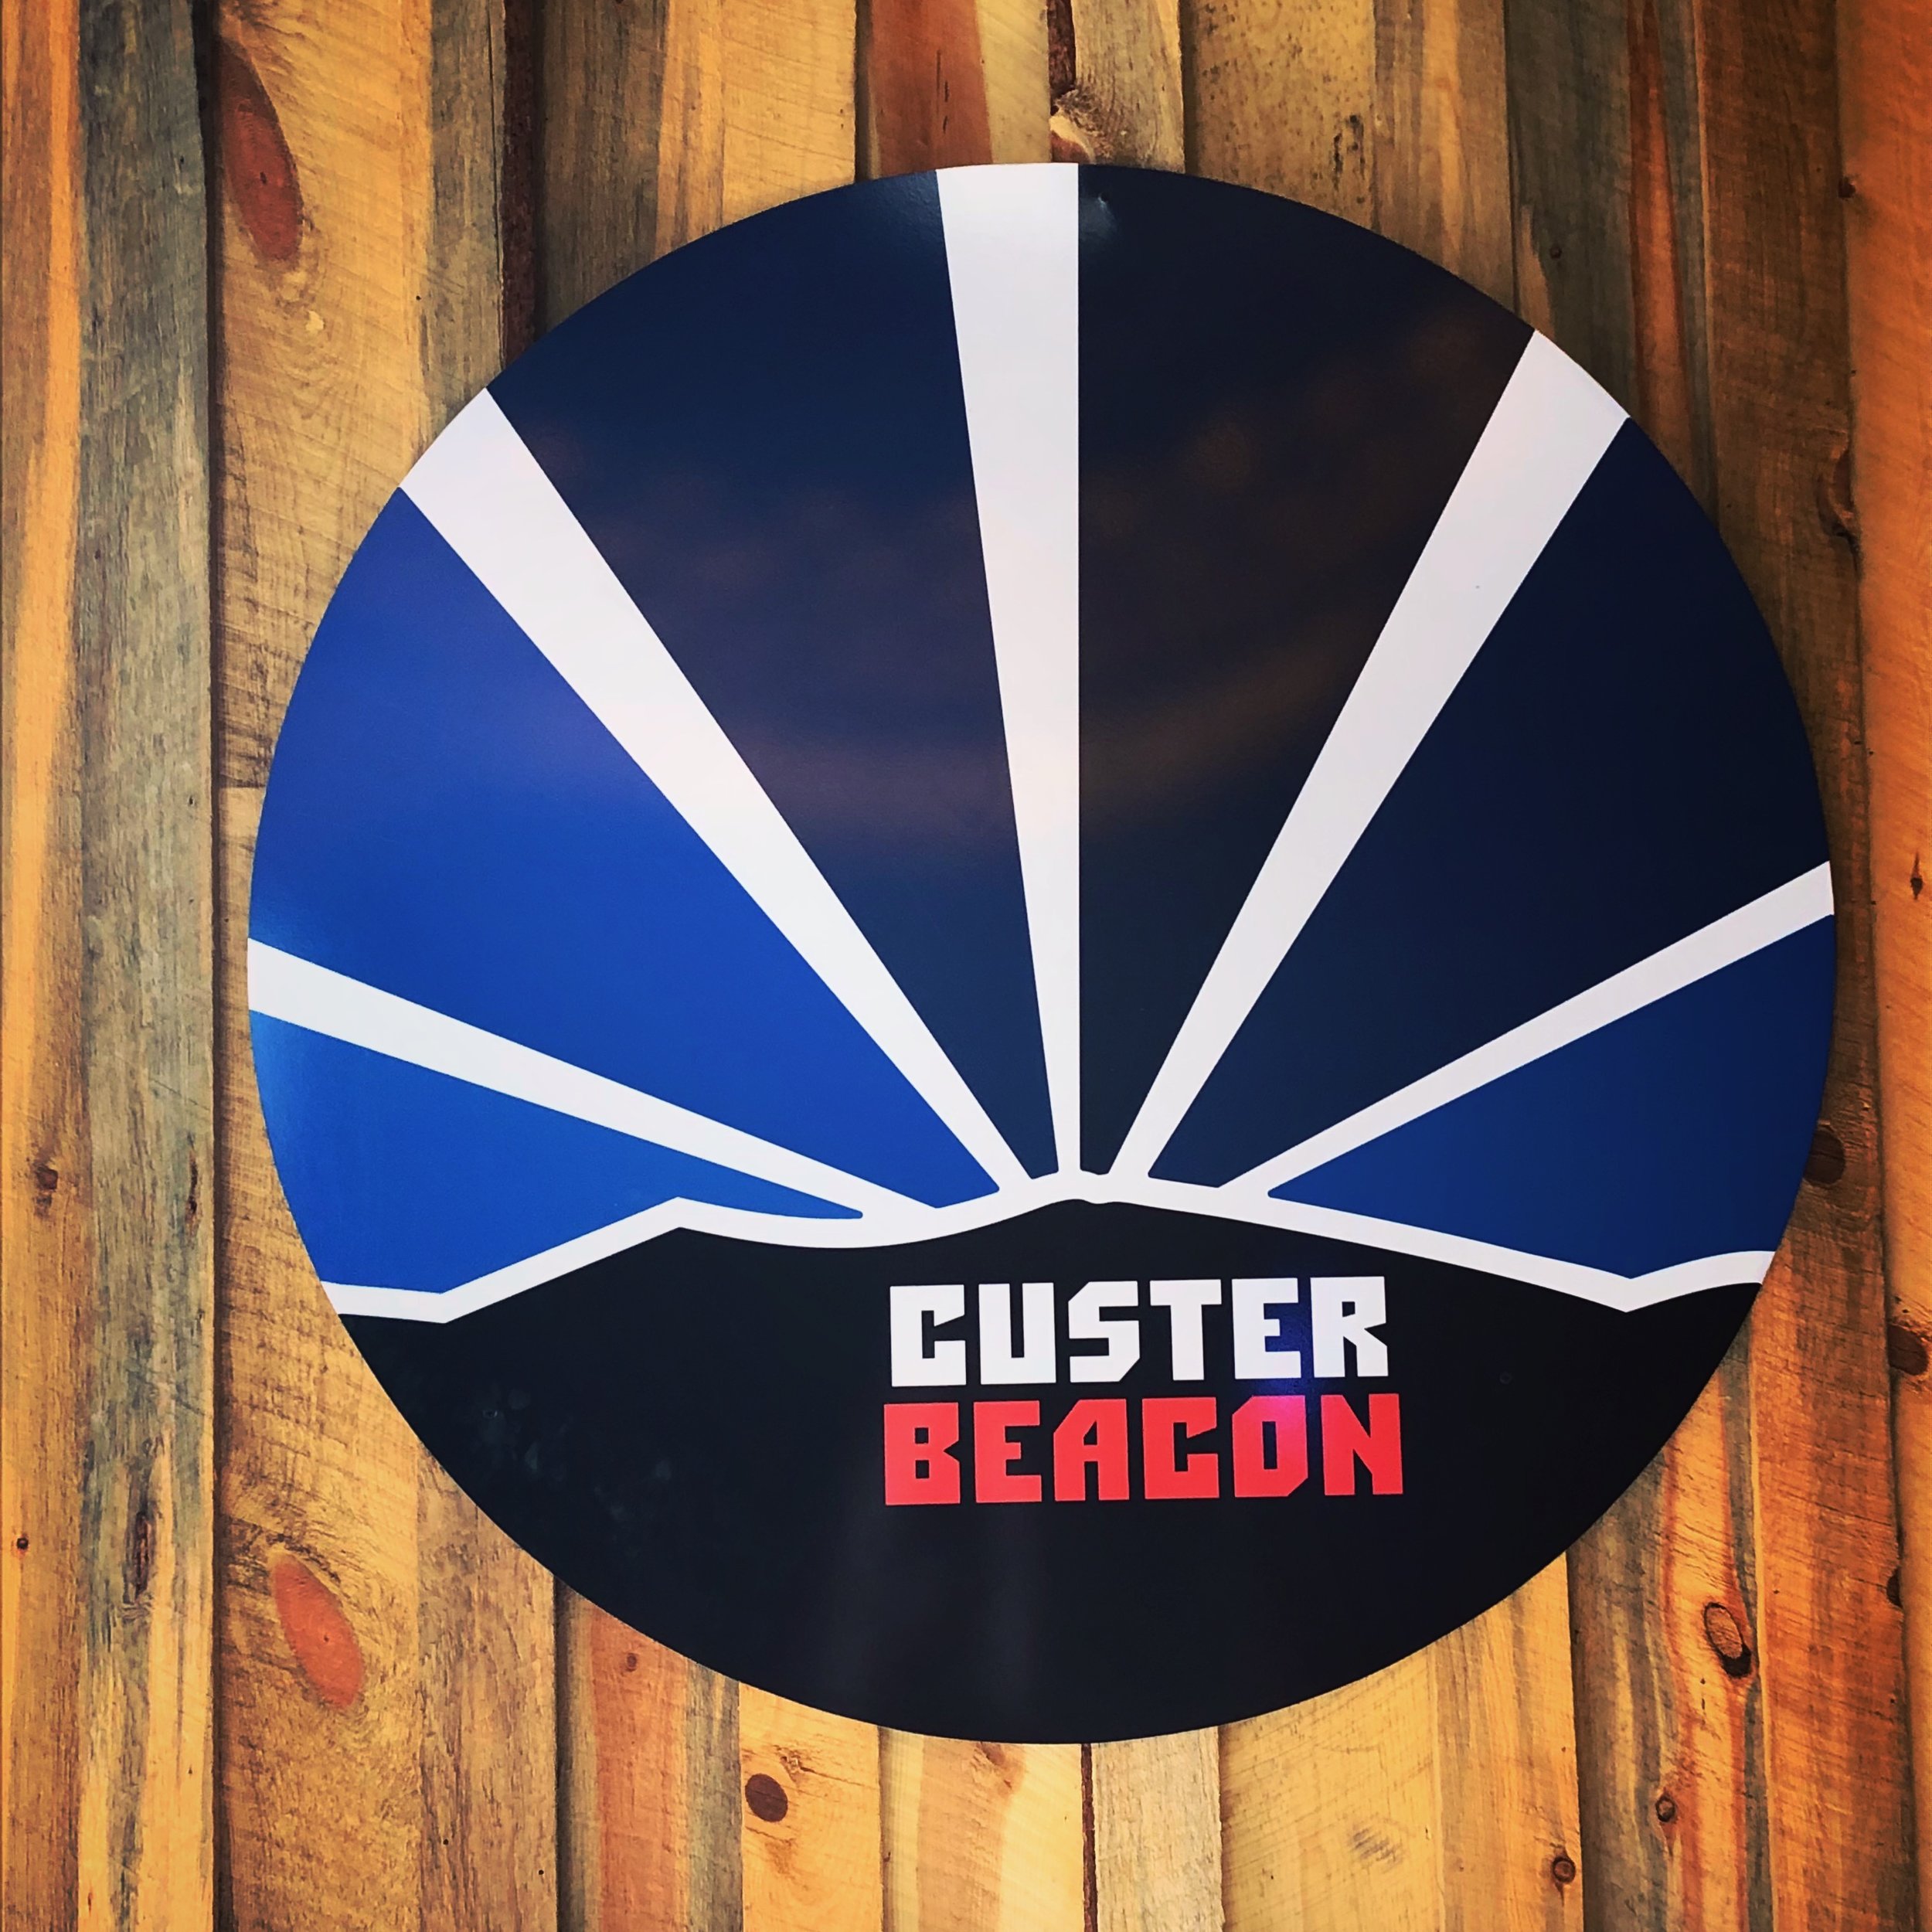 Beacon sign on wood.jpg